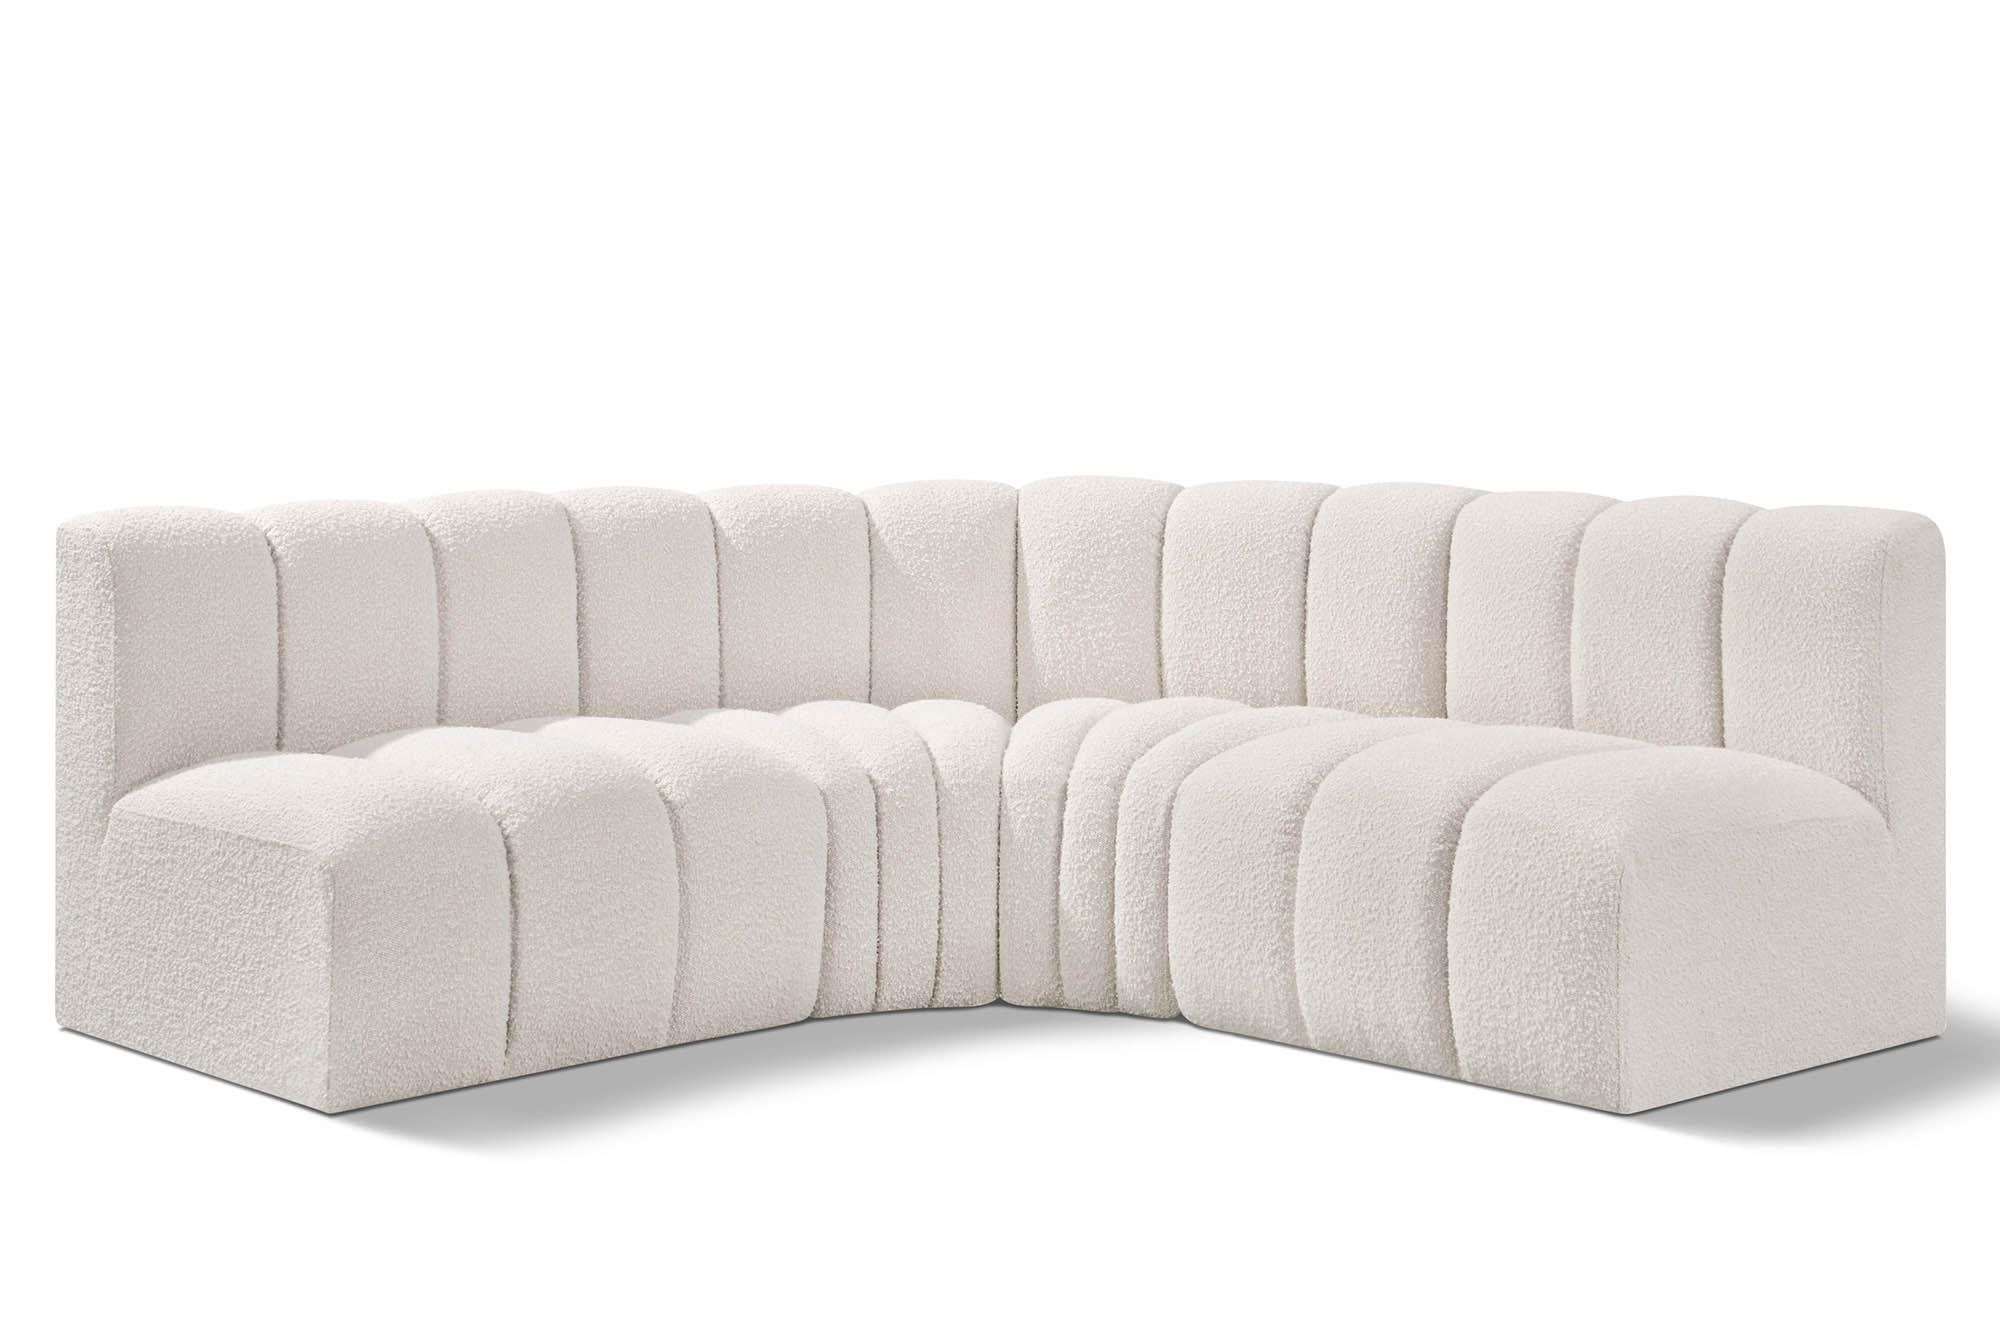 Contemporary, Modern Modular Sectional Sofa ARC 102Cream-S4B 102Cream-S4B in Cream 